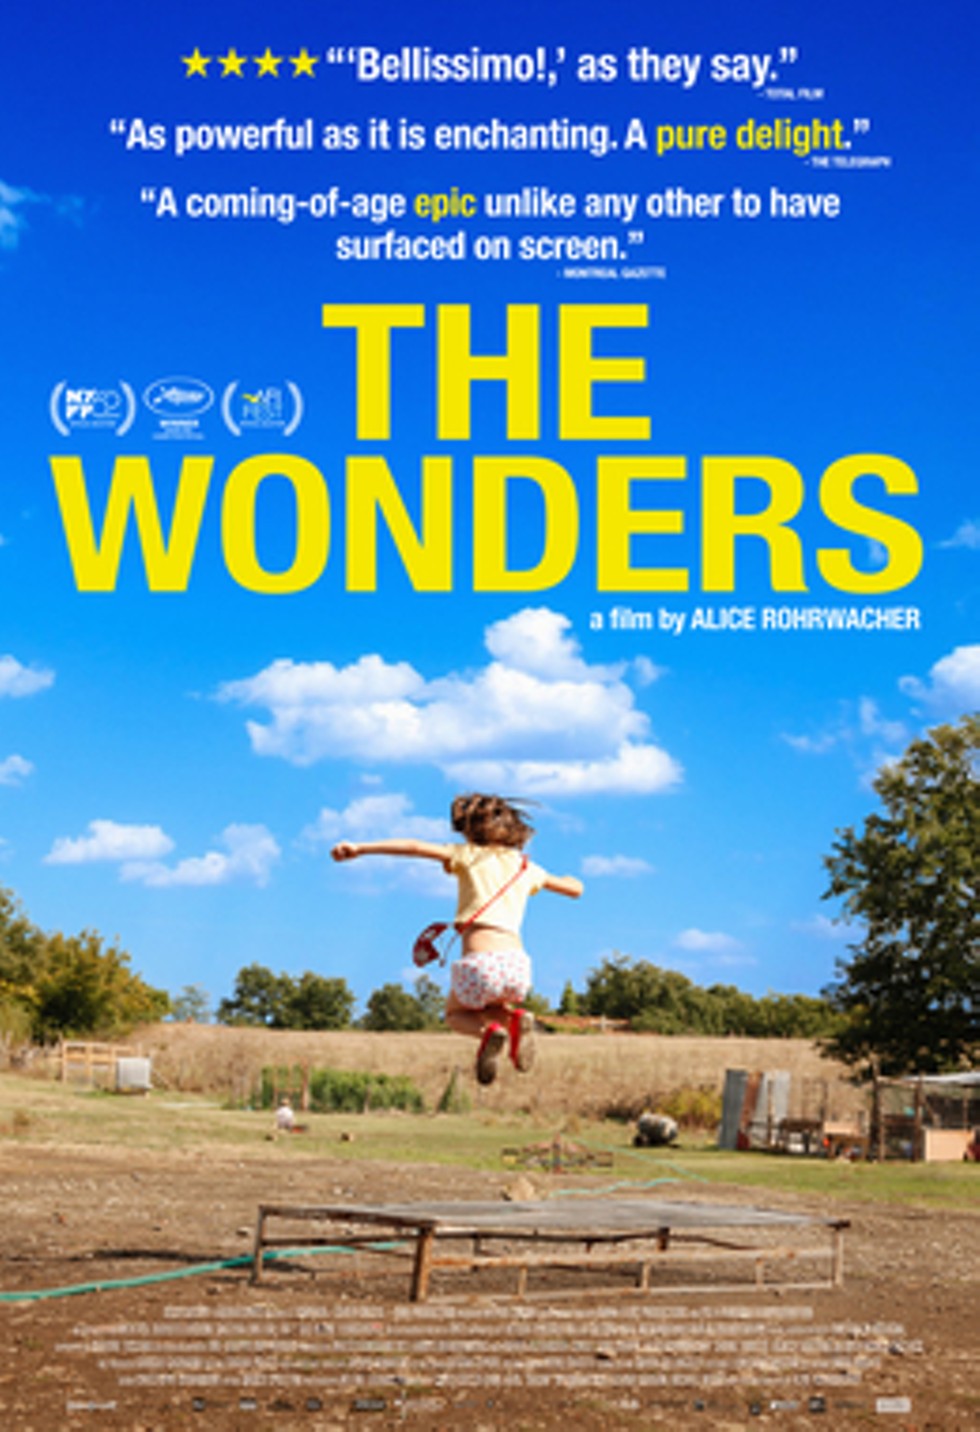 the_wonders_by_alice_rohrwacher_2014_film_poster.jpg